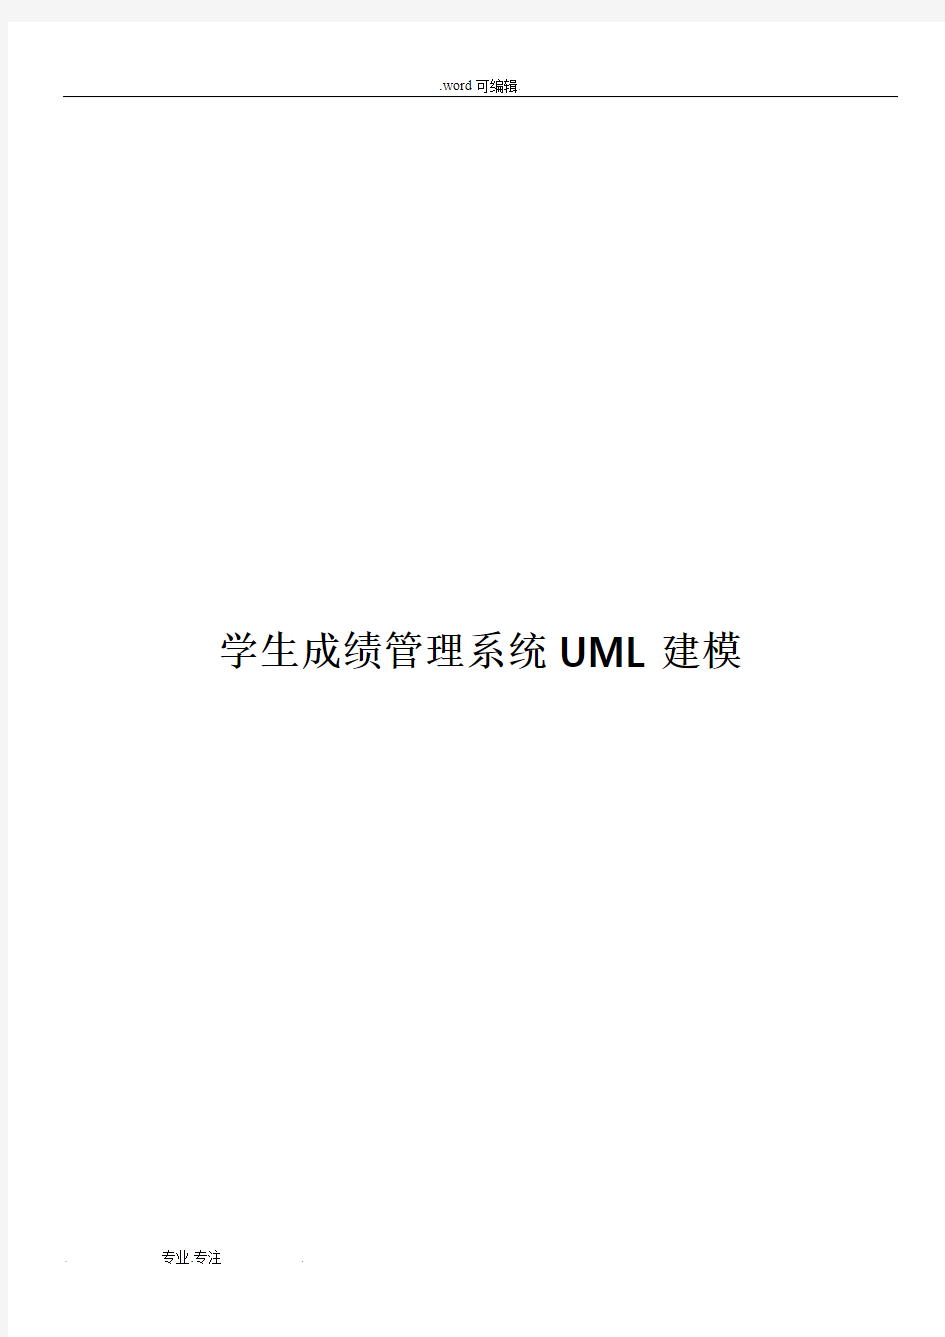 UML_课程设计_学生成绩管理系统_[精]